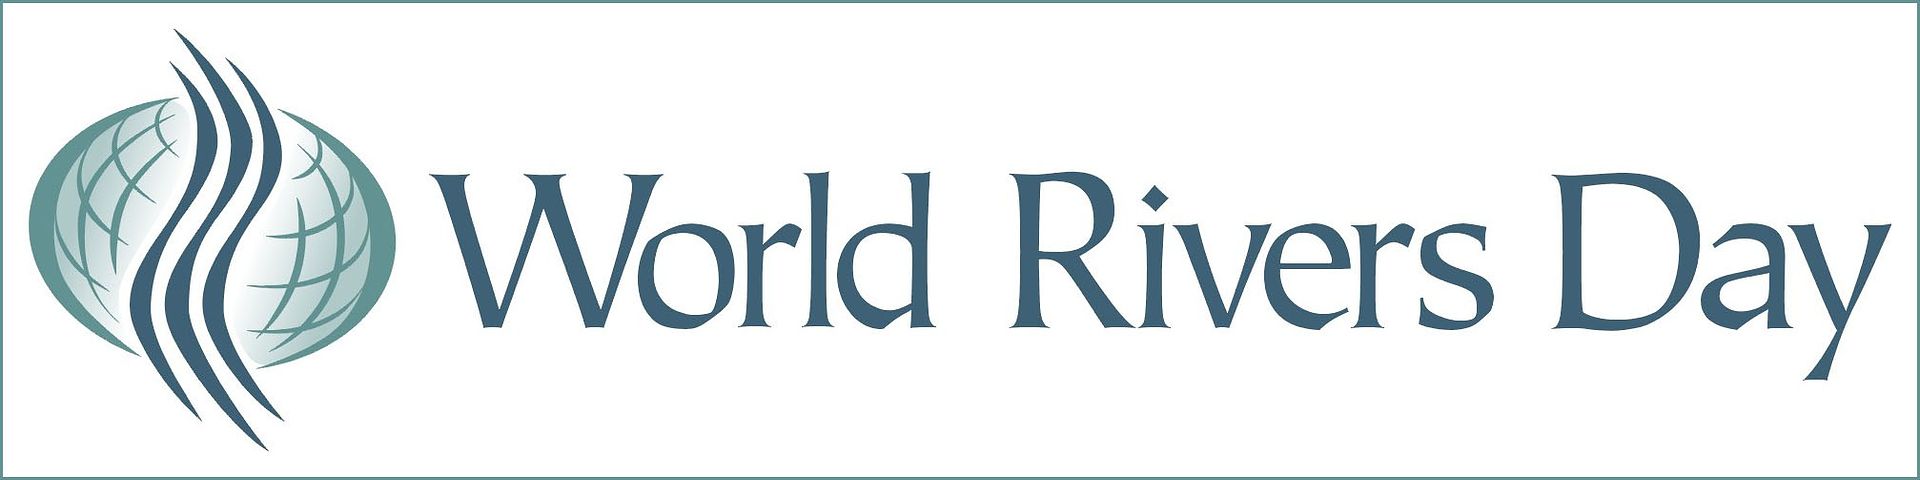 World Rivers Day logo